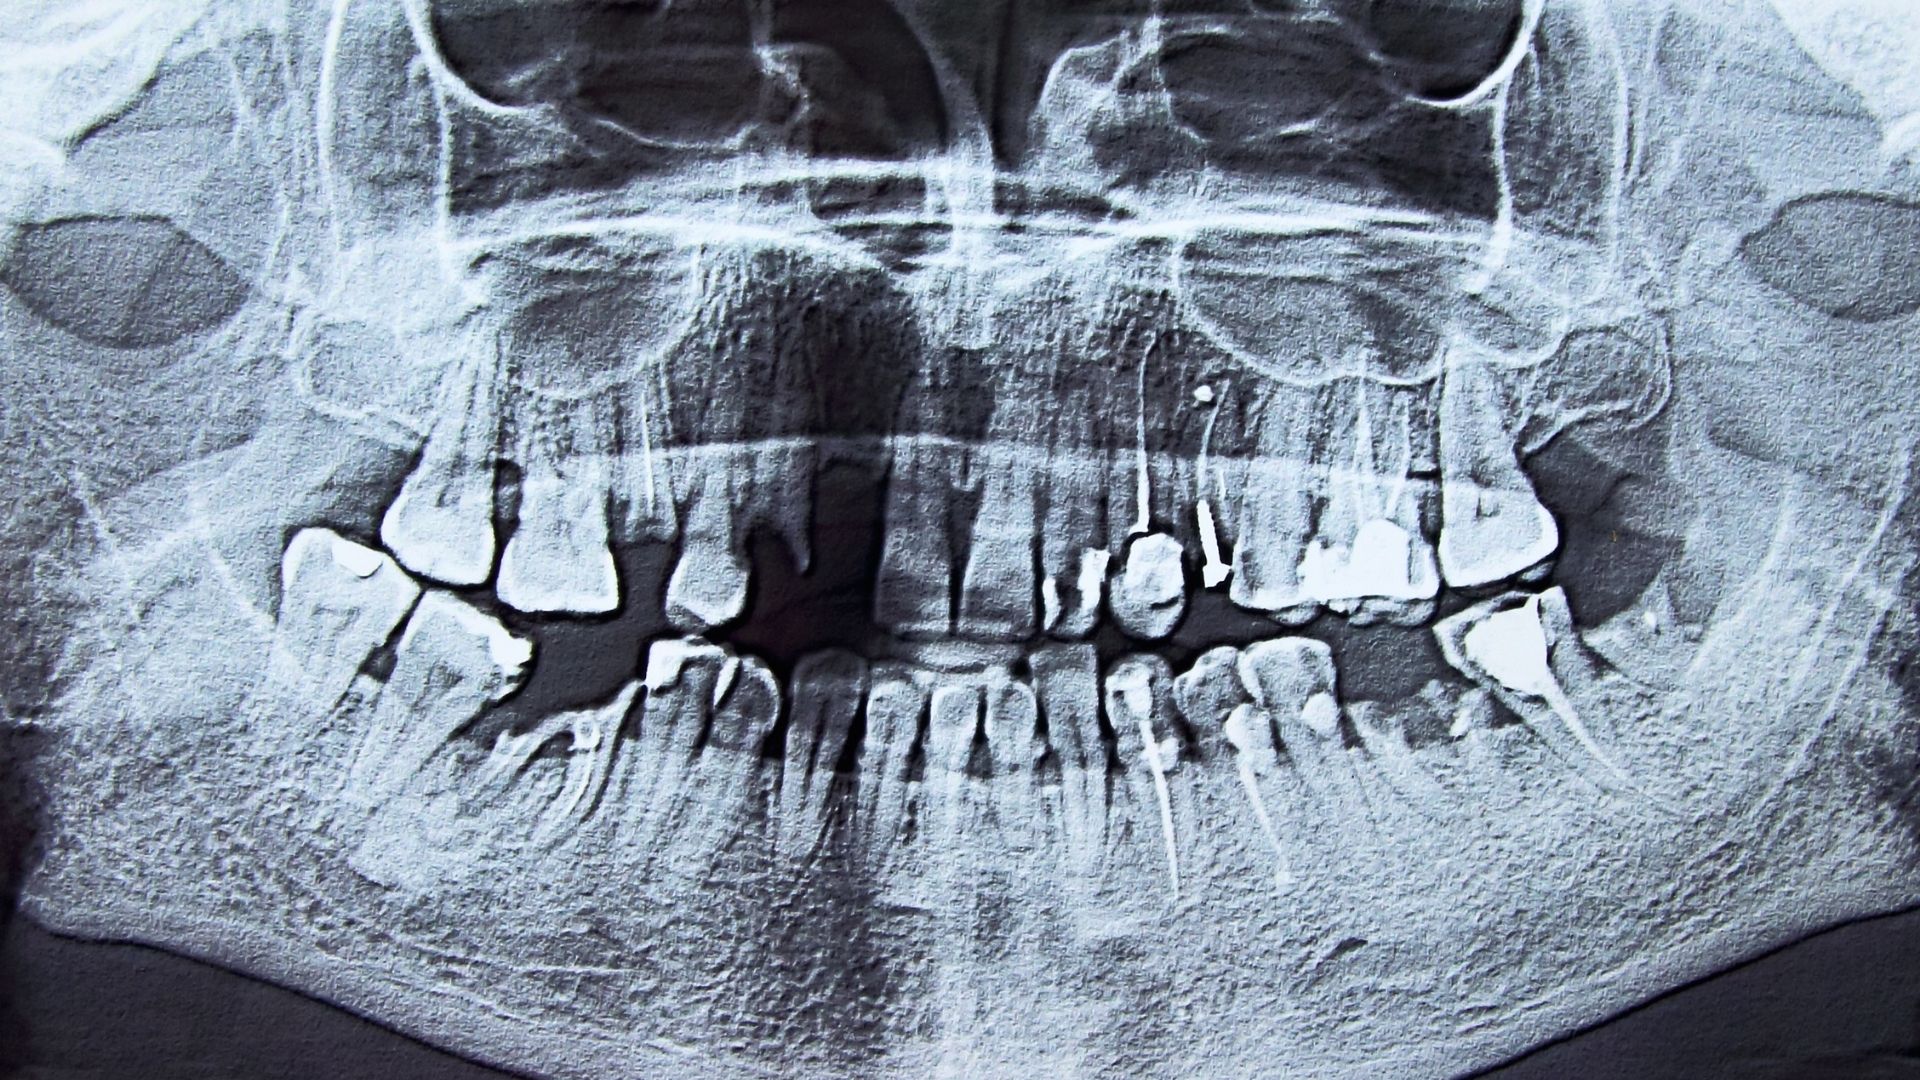 intraoral dental